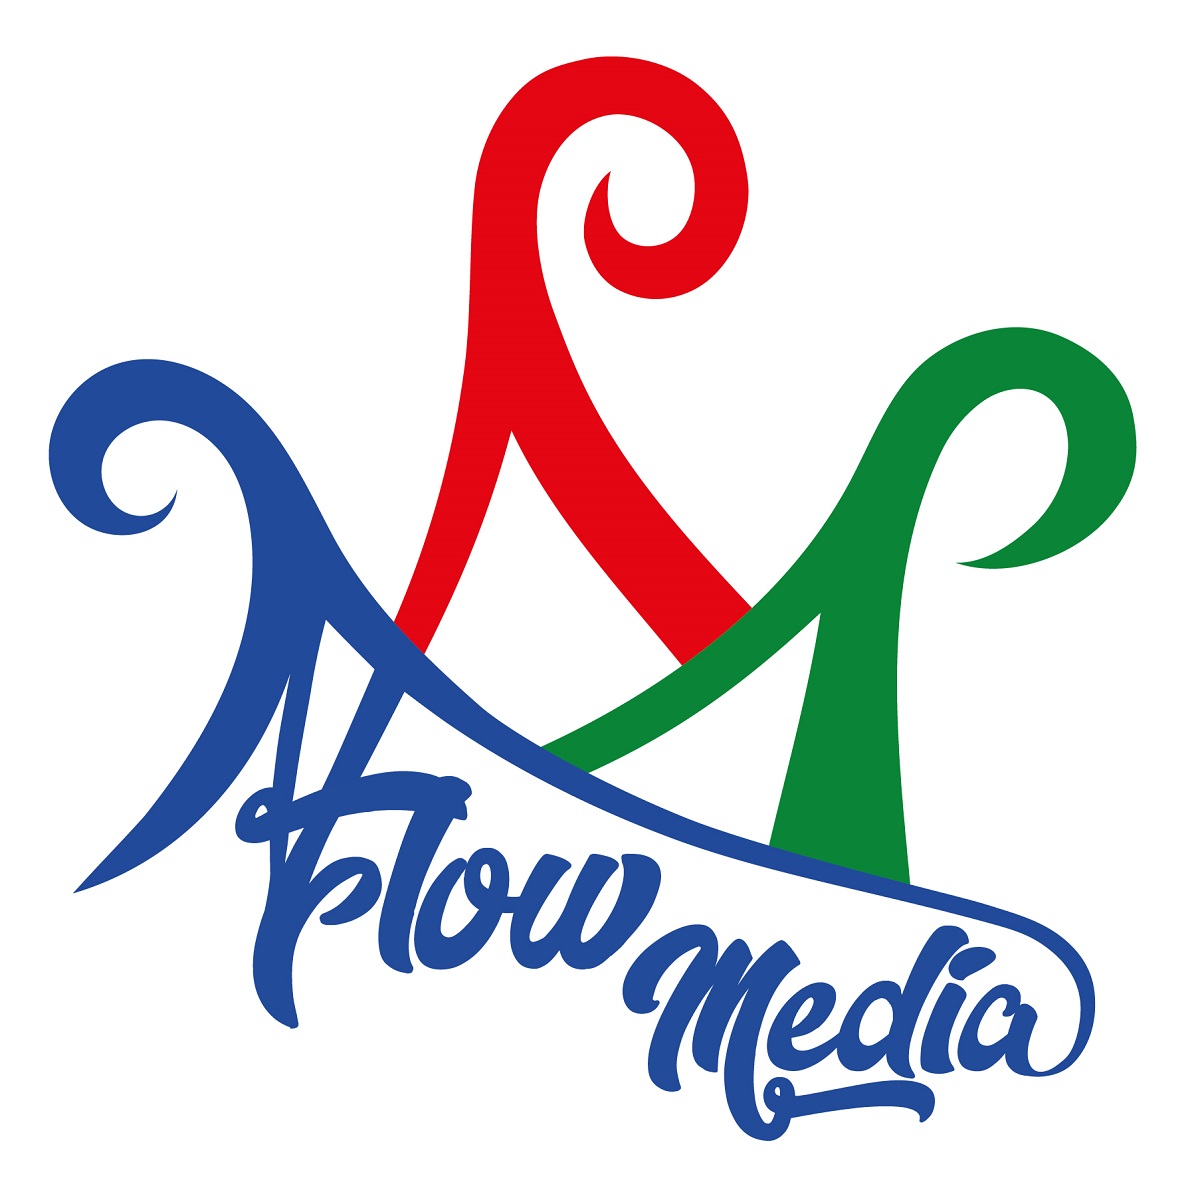 Flow Media